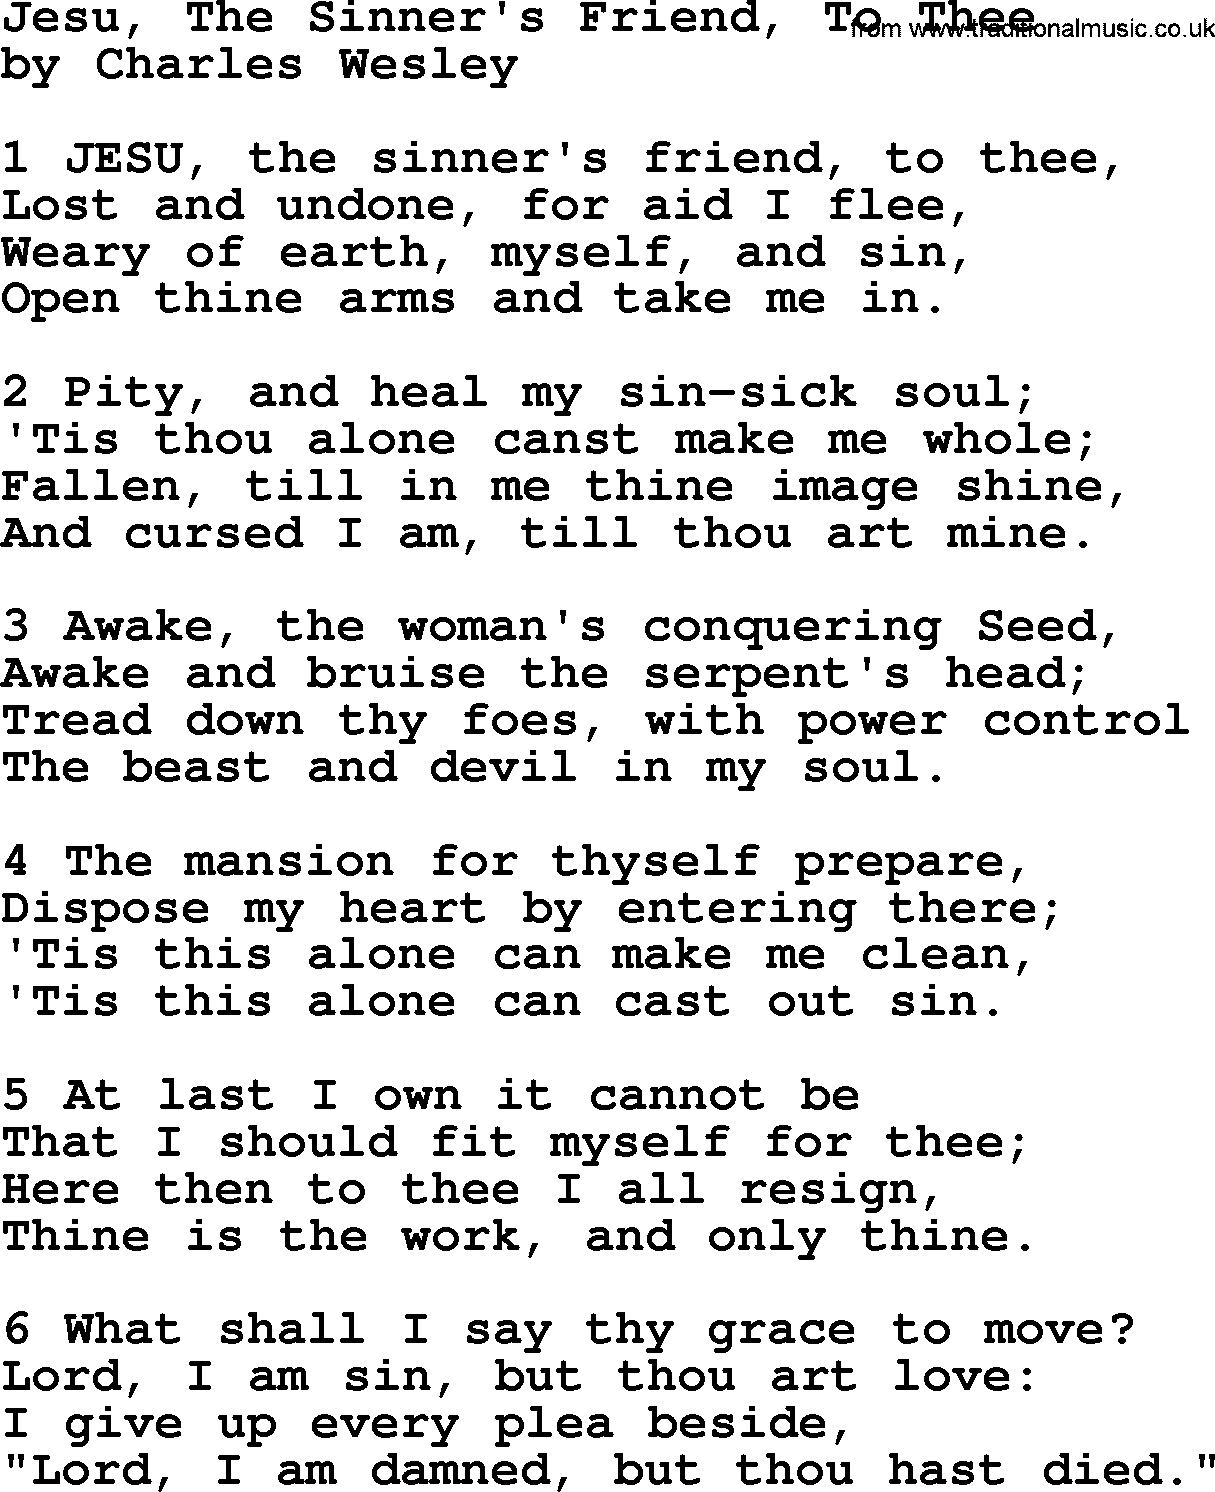 Charles Wesley hymn: Jesu, The Sinner's Friend, To Thee, lyrics